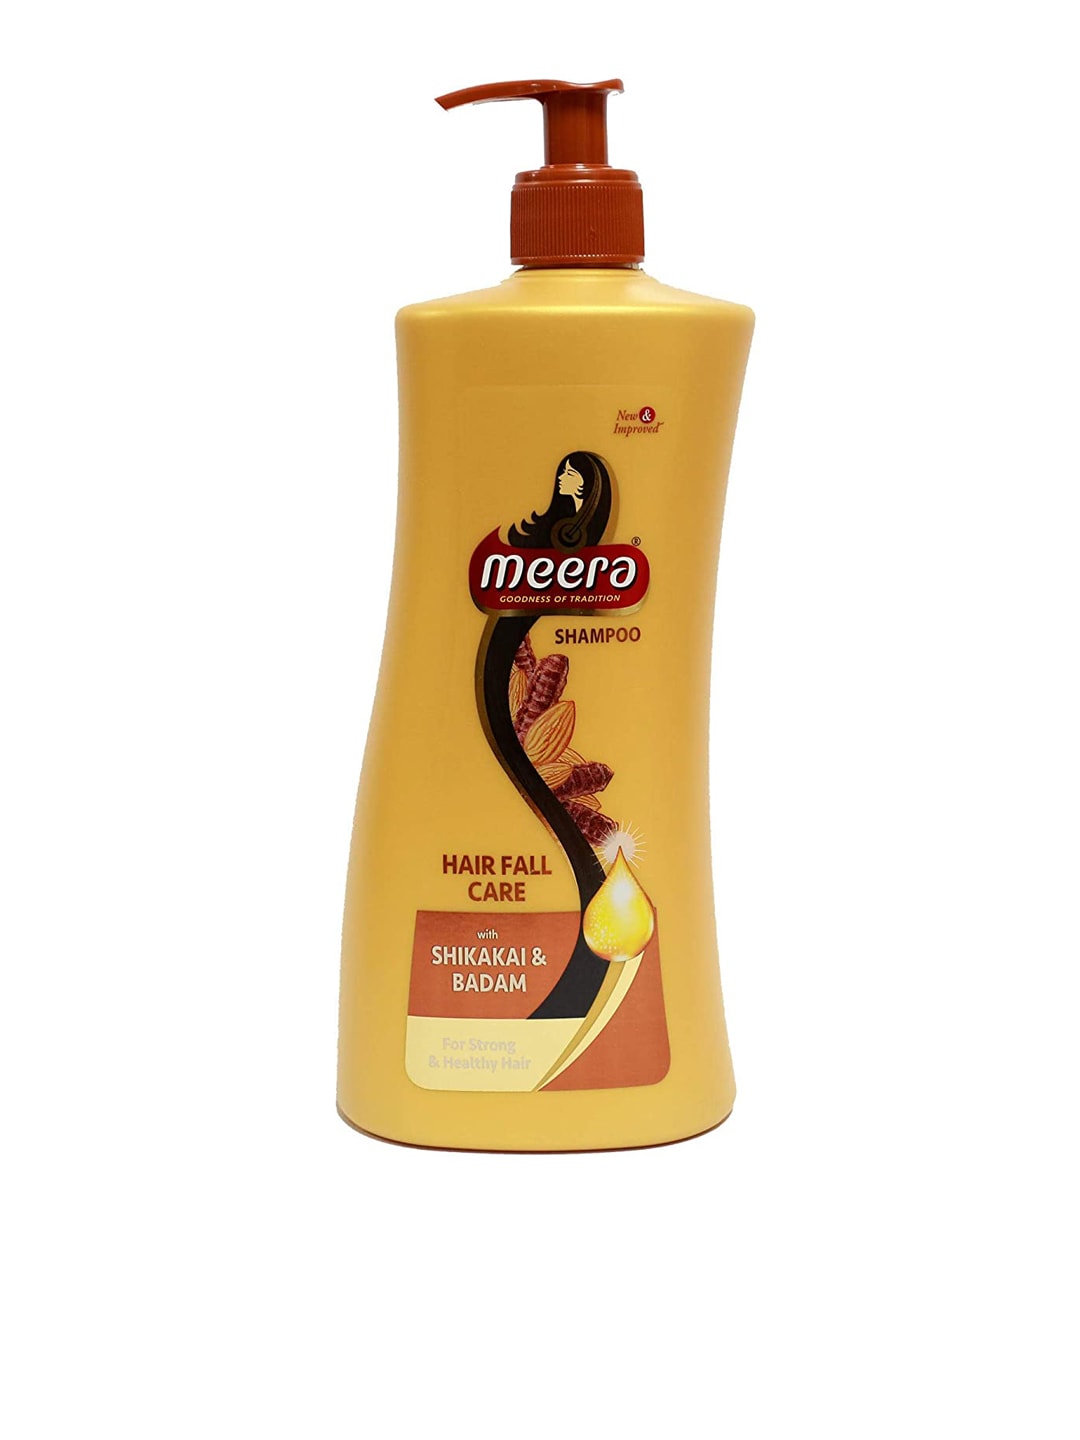 Meera GOODNESS OF TRADITION Hairfall Care Shampoo Infused with Shikakai & Badam 650 ml Price in India